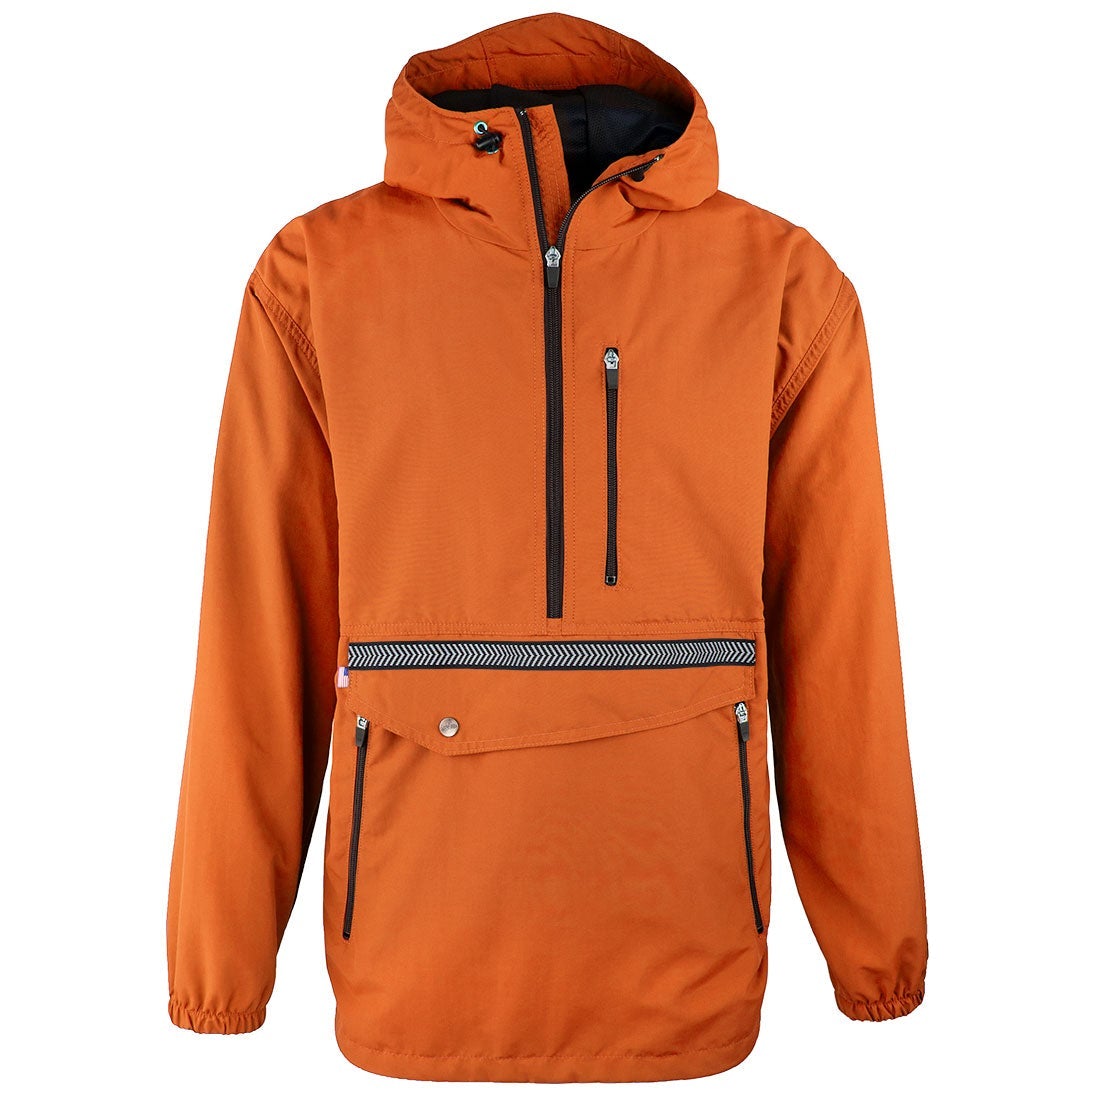 Cycle-Topshop Men Wind Breaker Coat Zipper Hoodie Jacket Quick Drying Sport  Outwear New 